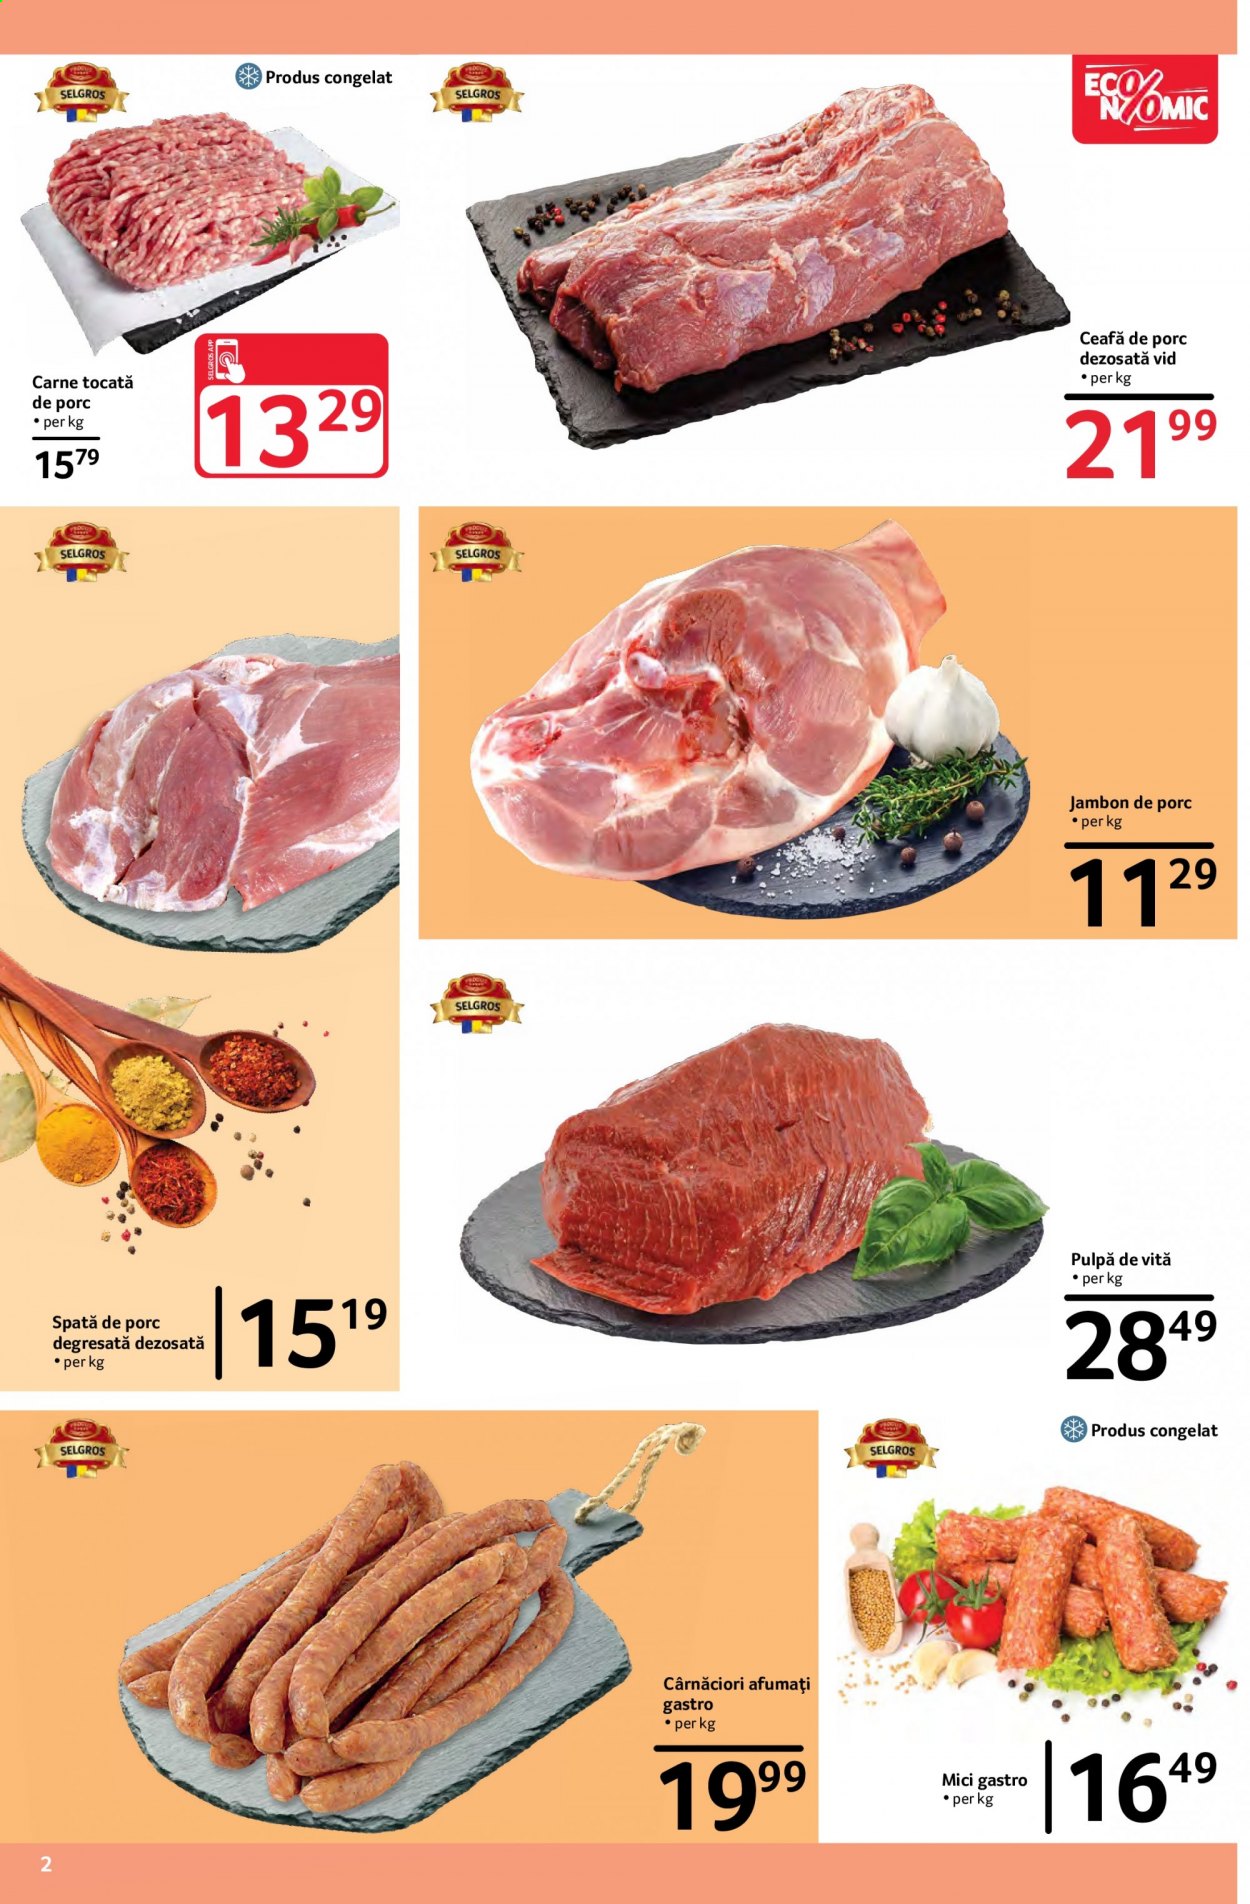 thumbnail - Cataloage Selgros - 01.06.2021 - 30.06.2021 - Produse în vânzare - carne tocată de porc, carne tocată, carne de porc, spată de porc, ceafă de porc, cârnaţi. Pagina 2.